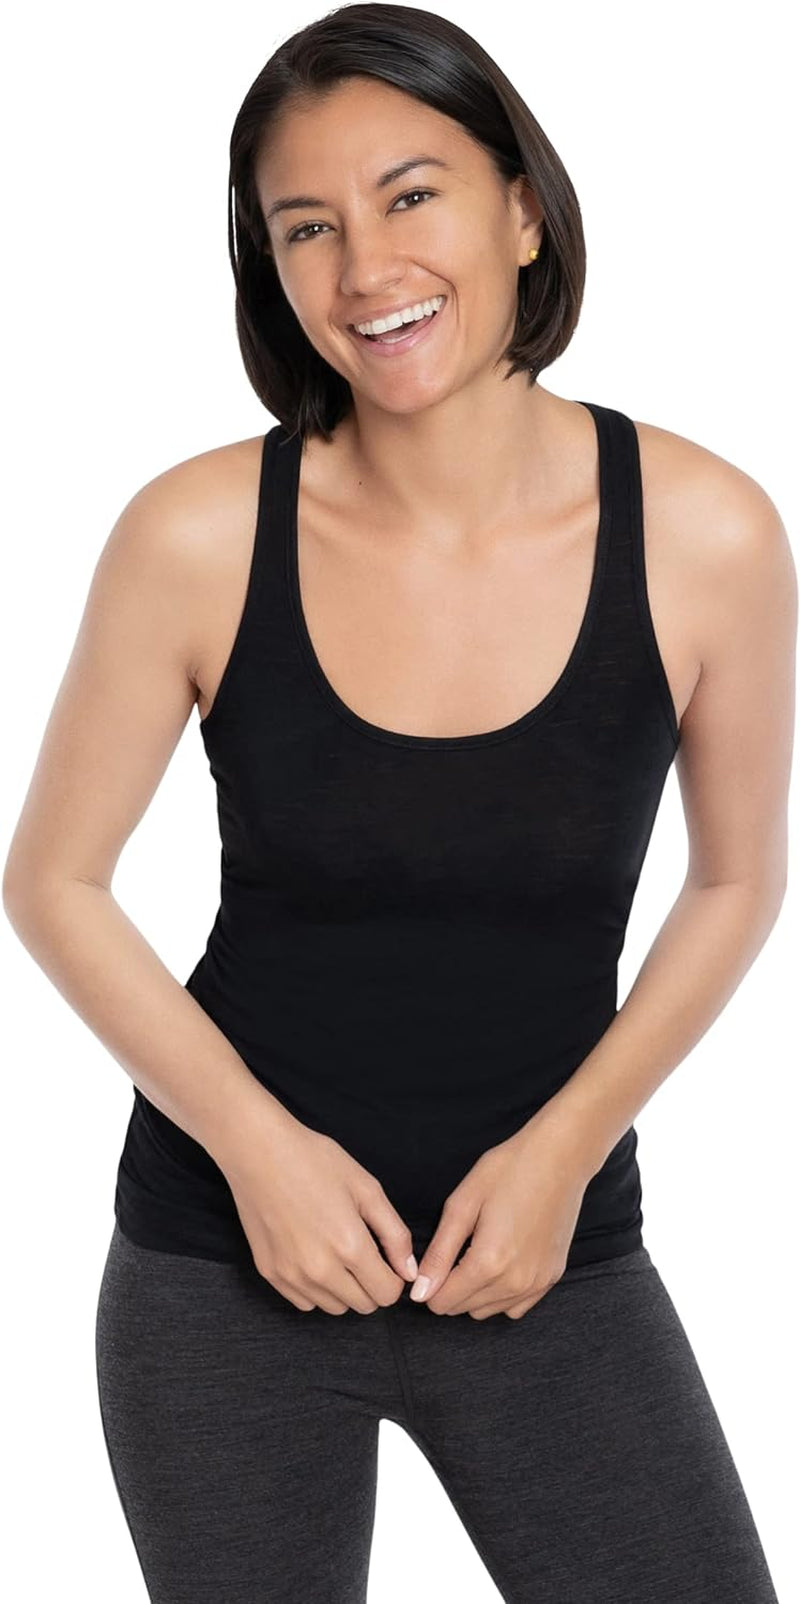 Woolly Clothing Women'S Merino Wool Tank Top - Ultralight - Wicking Breathable Anti-Odor